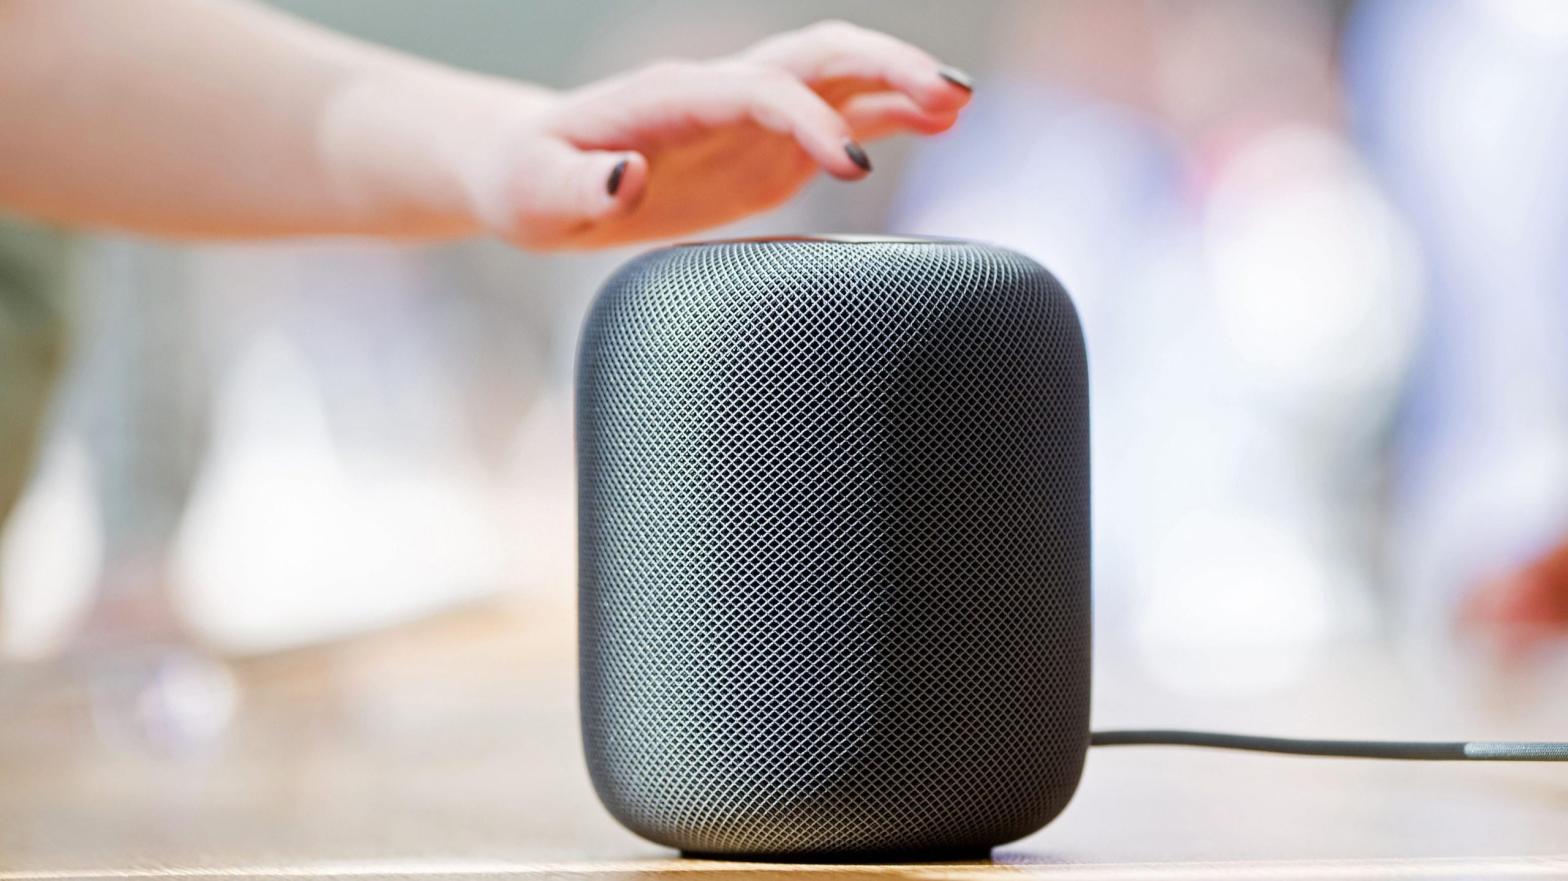 An Apple HomePod speaker. (Photo: Noah Berger/AFP, Getty Images)